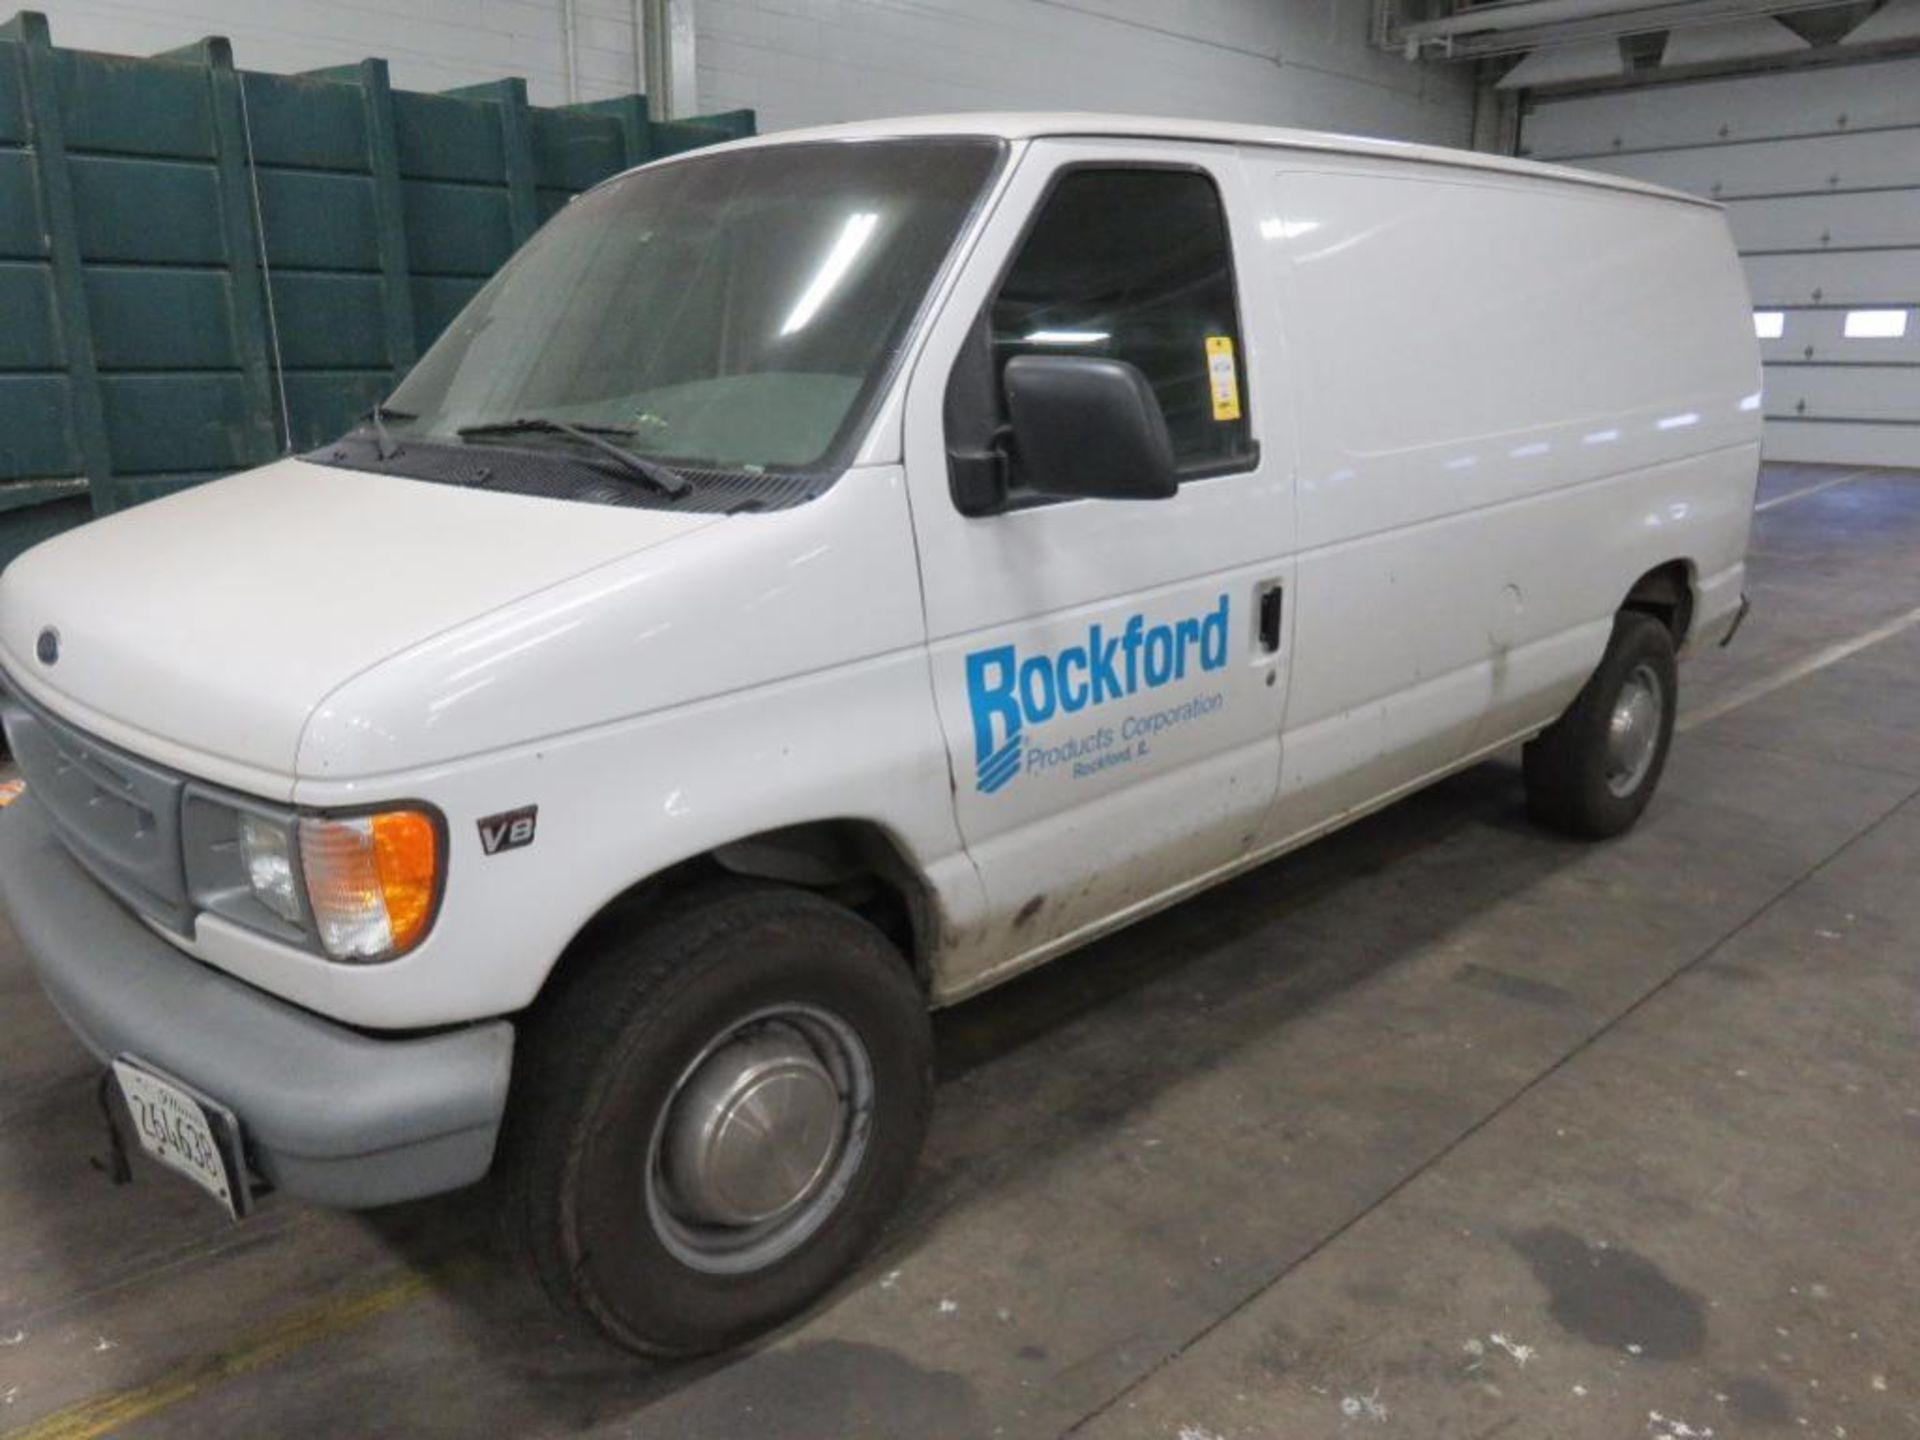 2000 Ford 1 Ton Cargo Van, VIN 1FTSE34FXYHA62769 (in loading dock) (Location C)